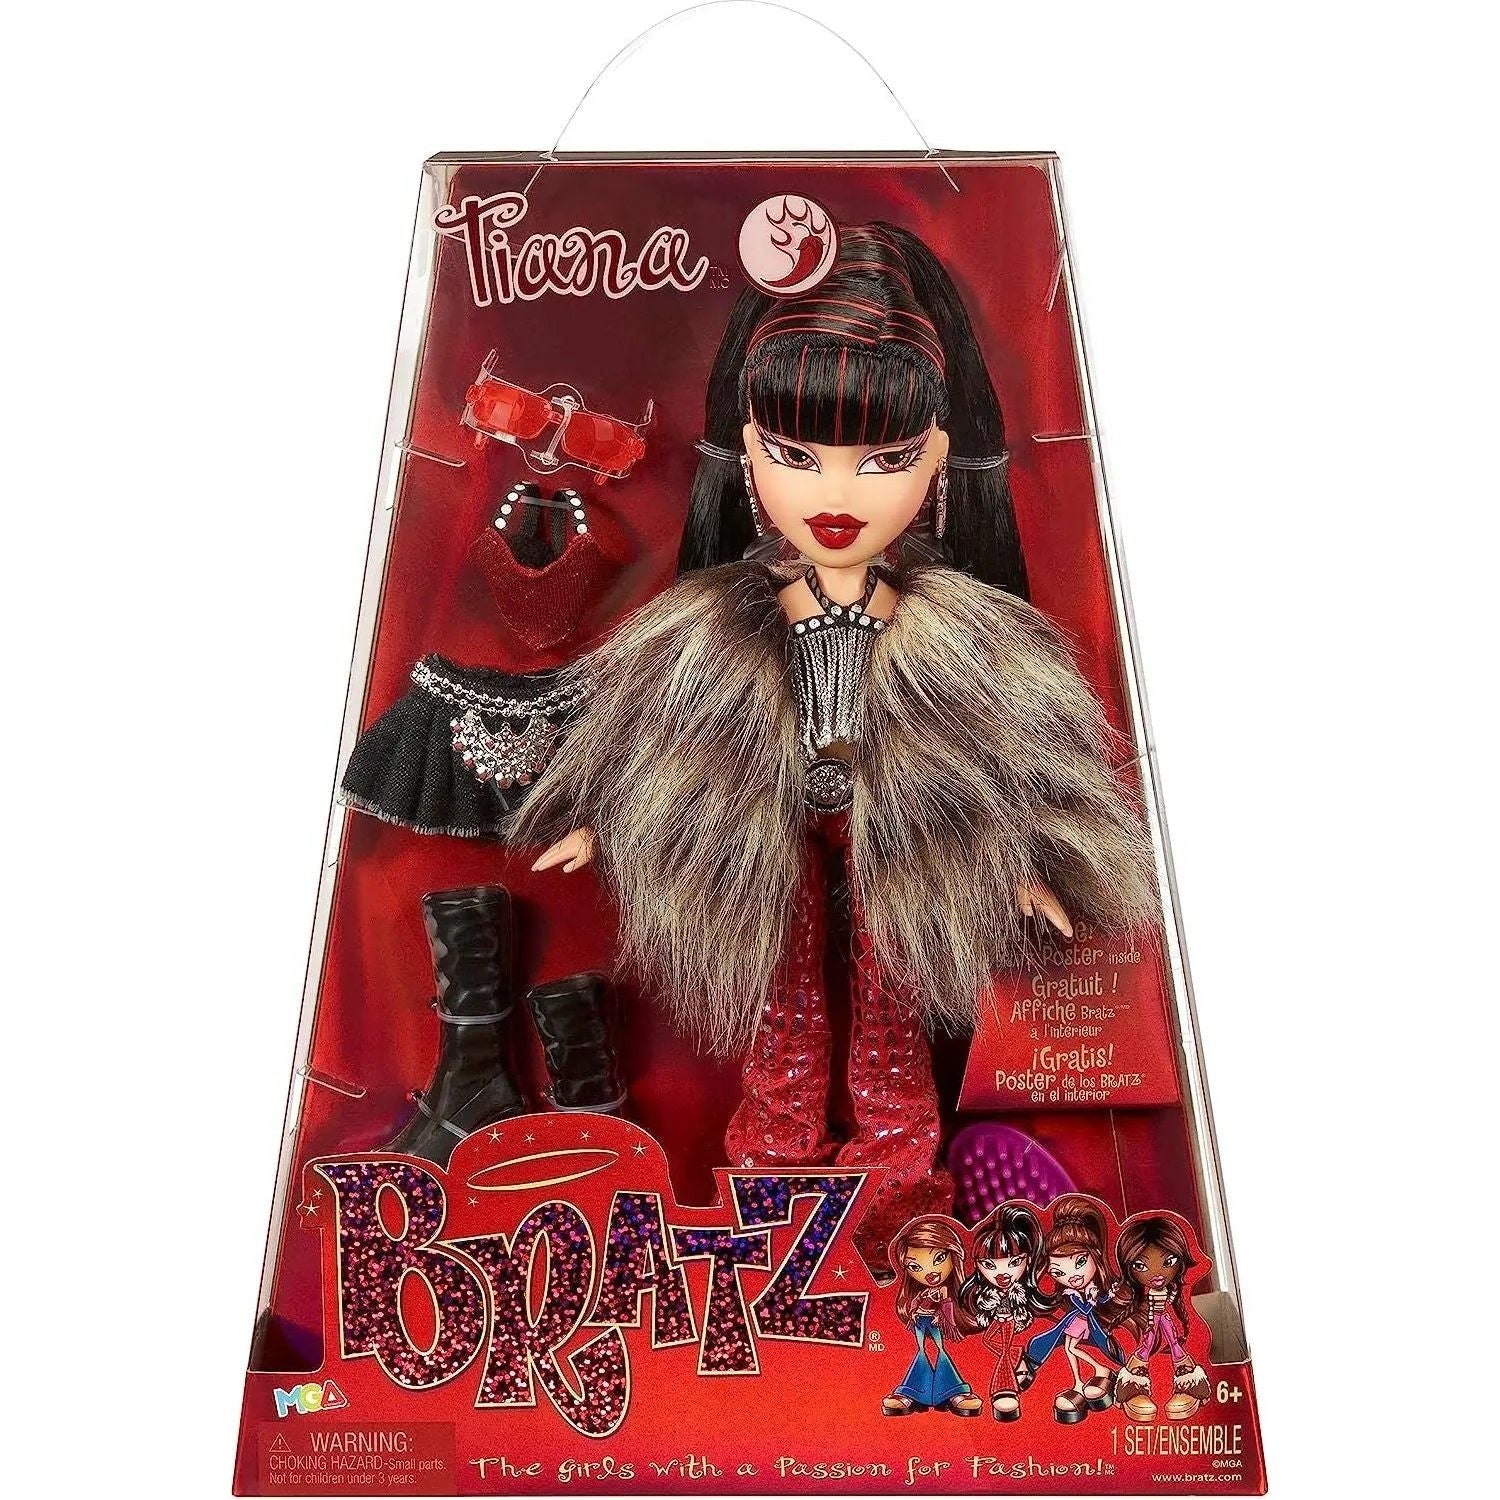 Bratz 20 Yearz Special Edition Original Fashion Doll Algeria